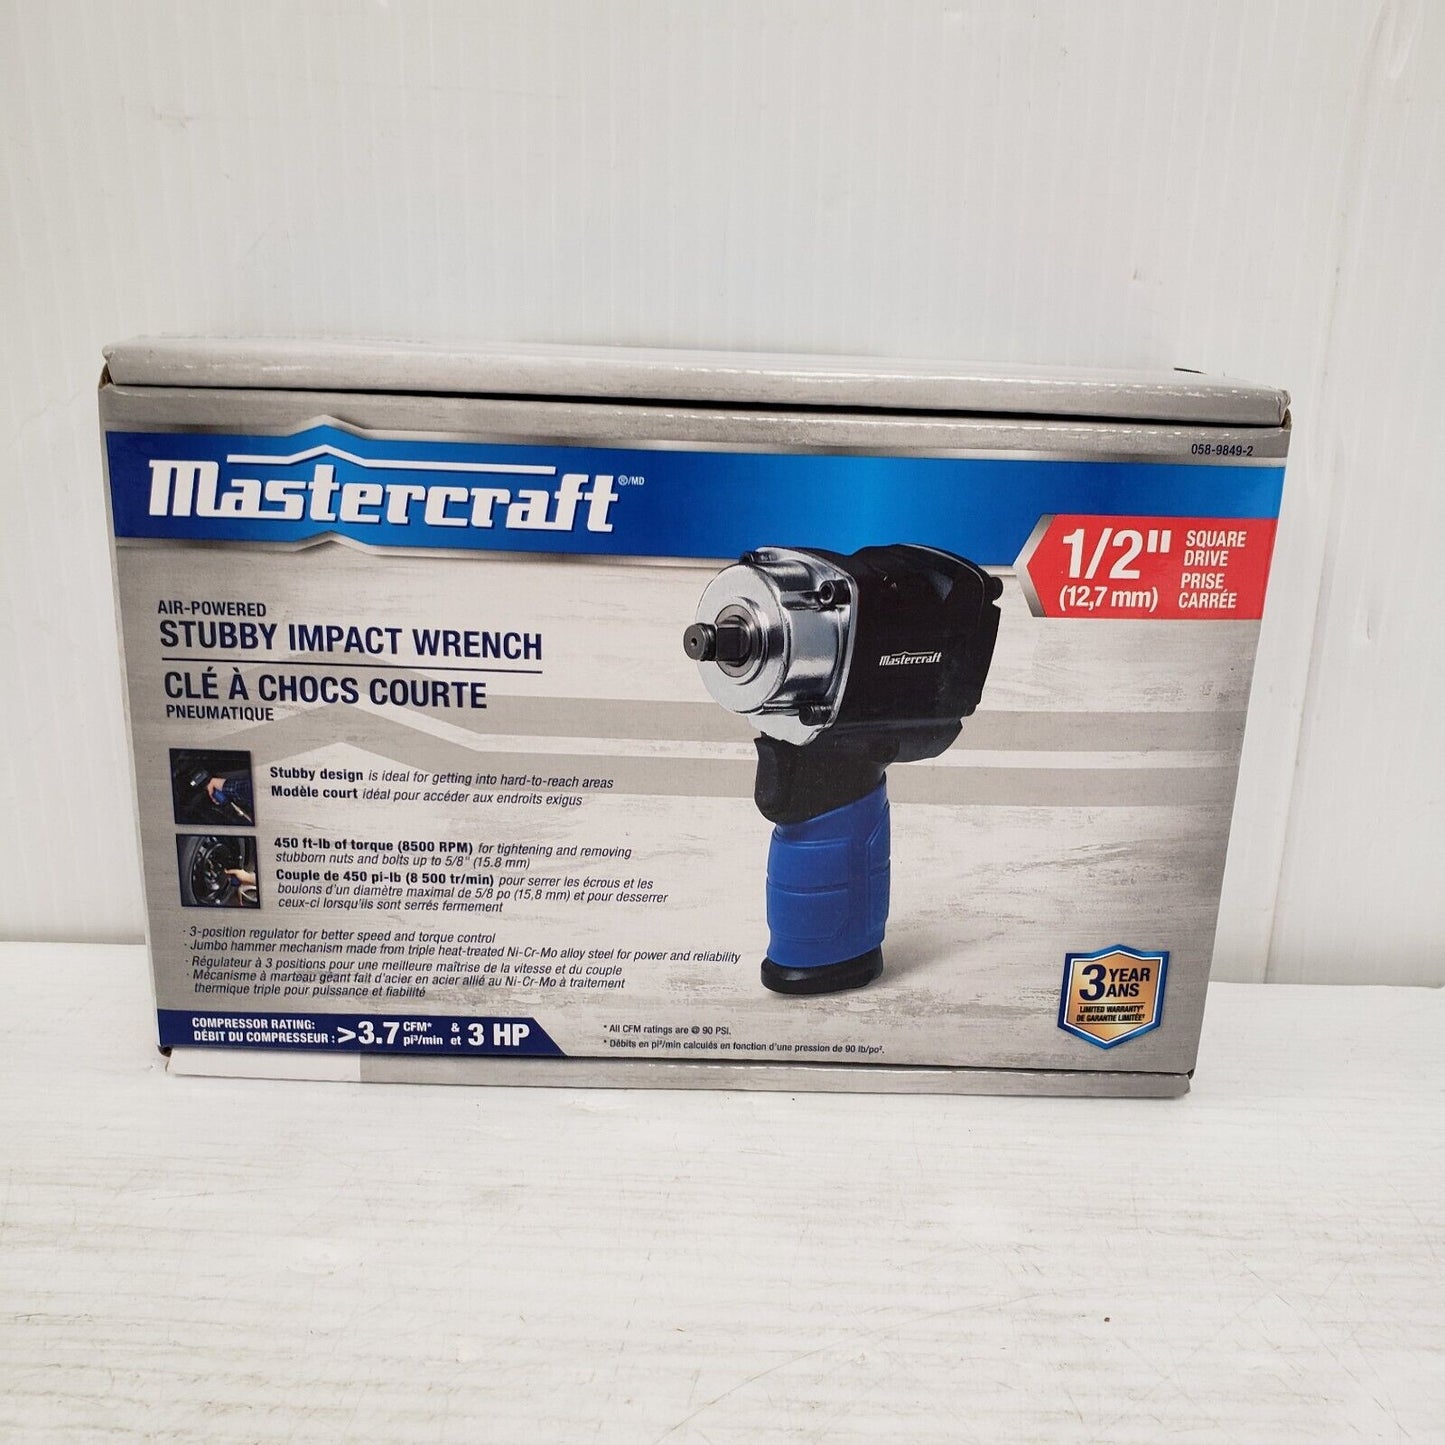 (24901-2) Mastercraft 058-9849-2 Air Impact Drill